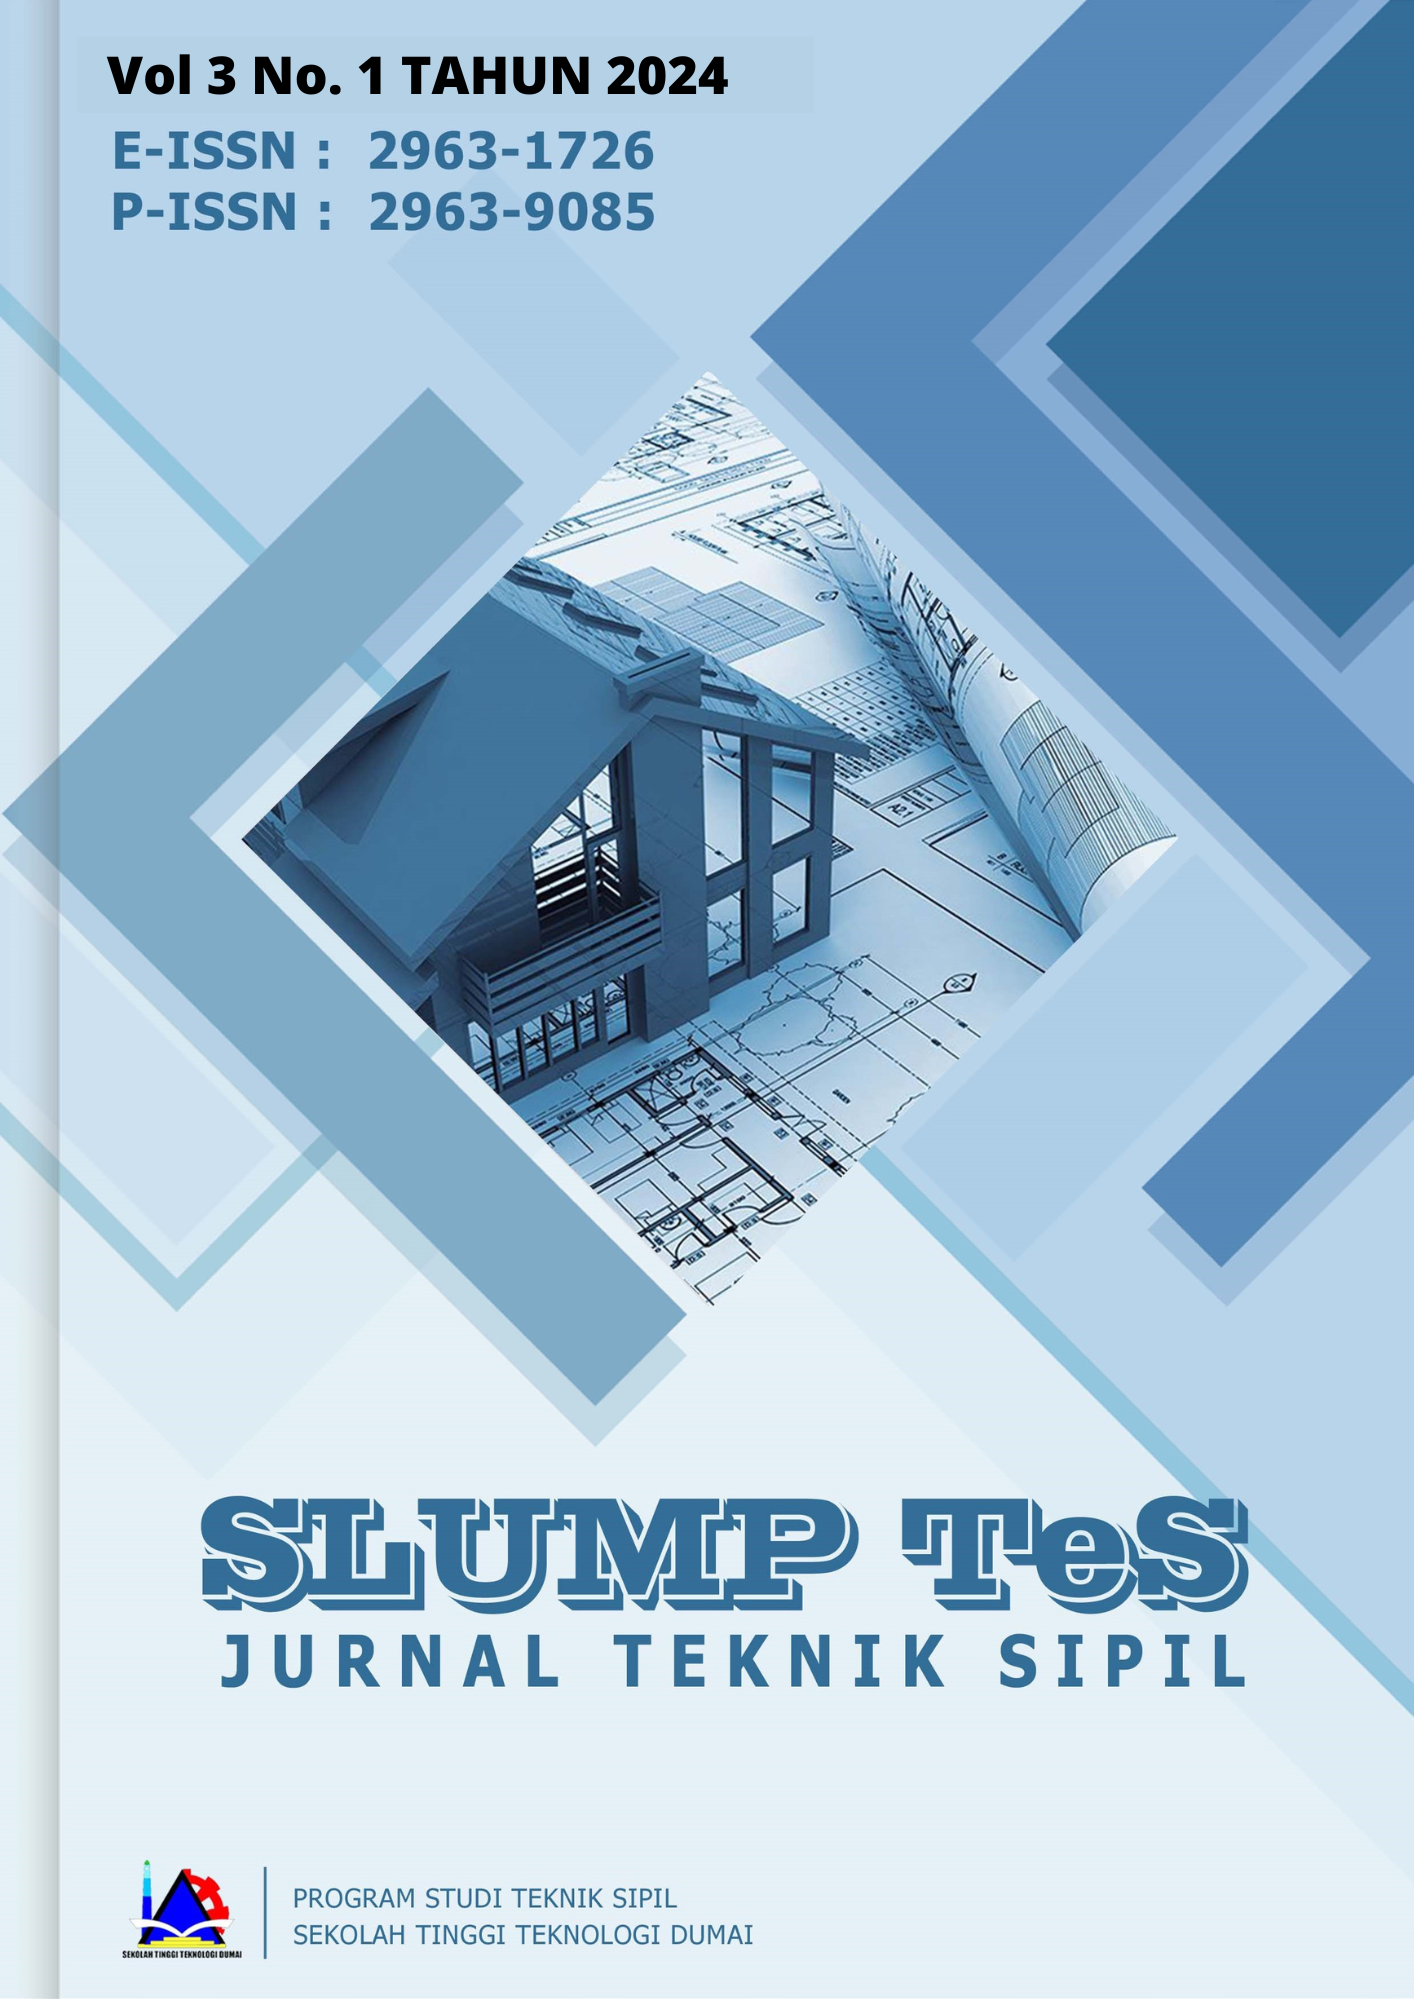 					Lihat Vol 3 No 1 (2024): SLUMP TeS : Jurnal Teknik Sipil
				